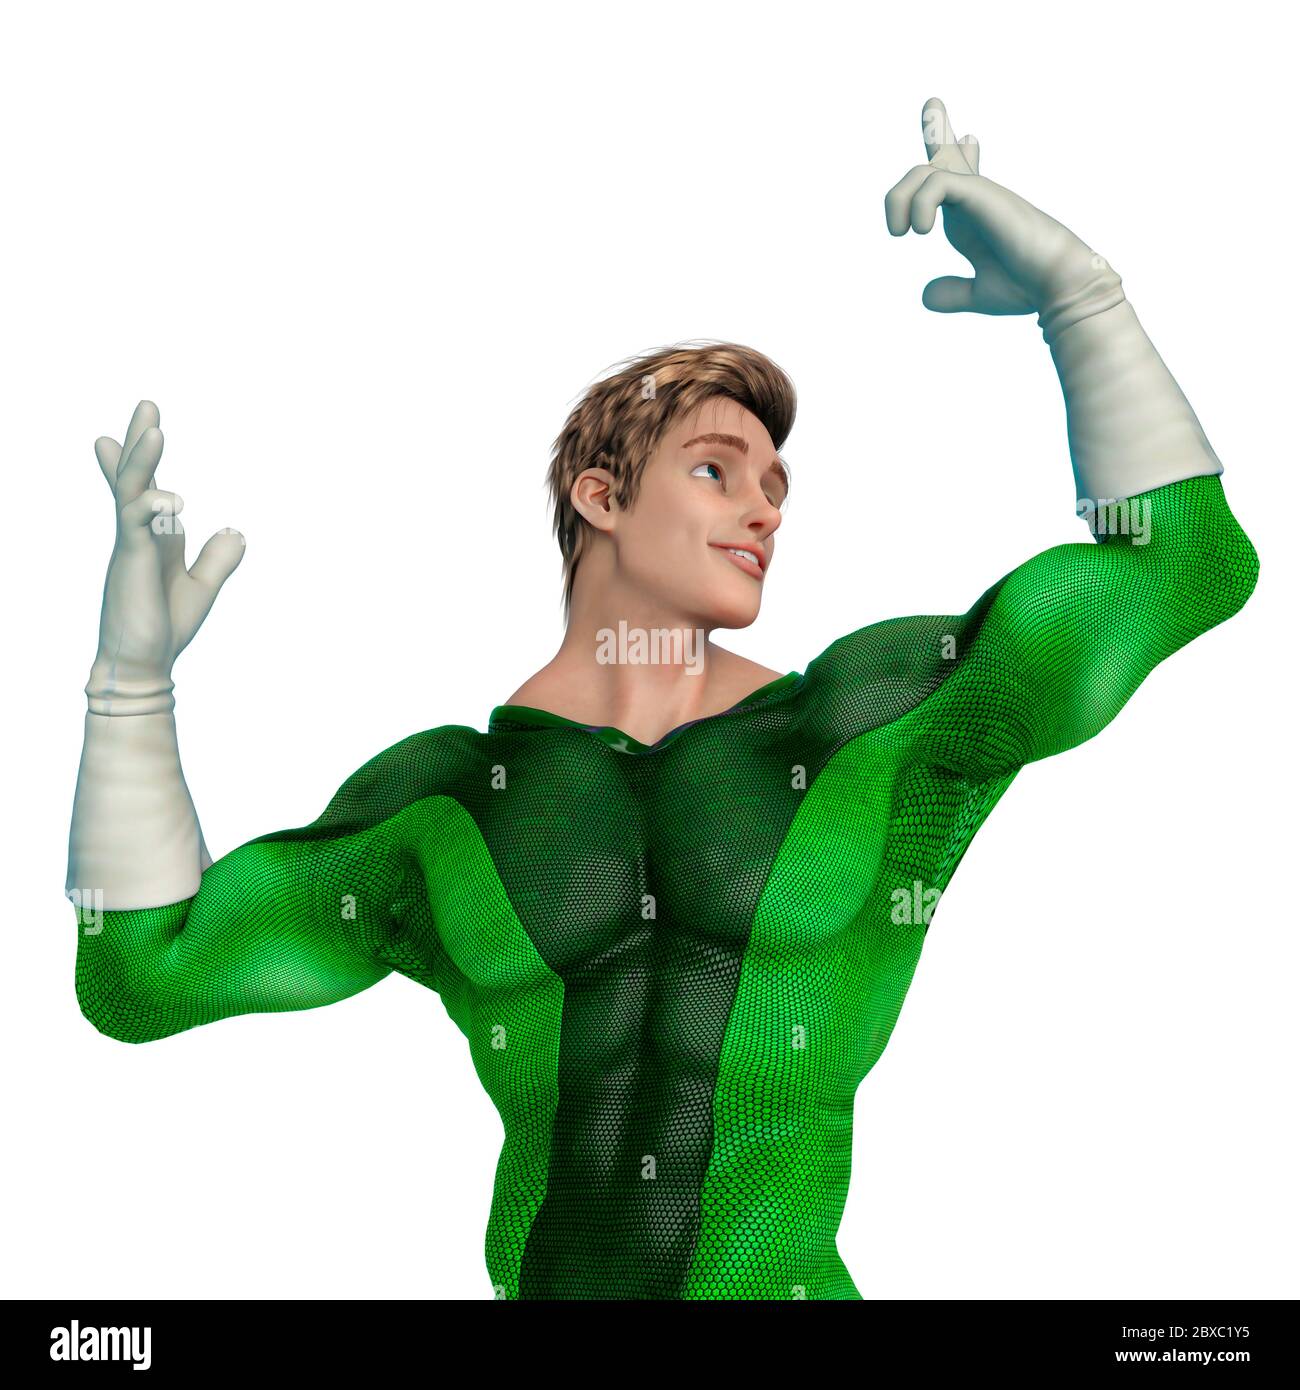 3d Green Hero Arriving on the Earth Stock Illustration - Illustration of  cartoon, muscular: 111244956